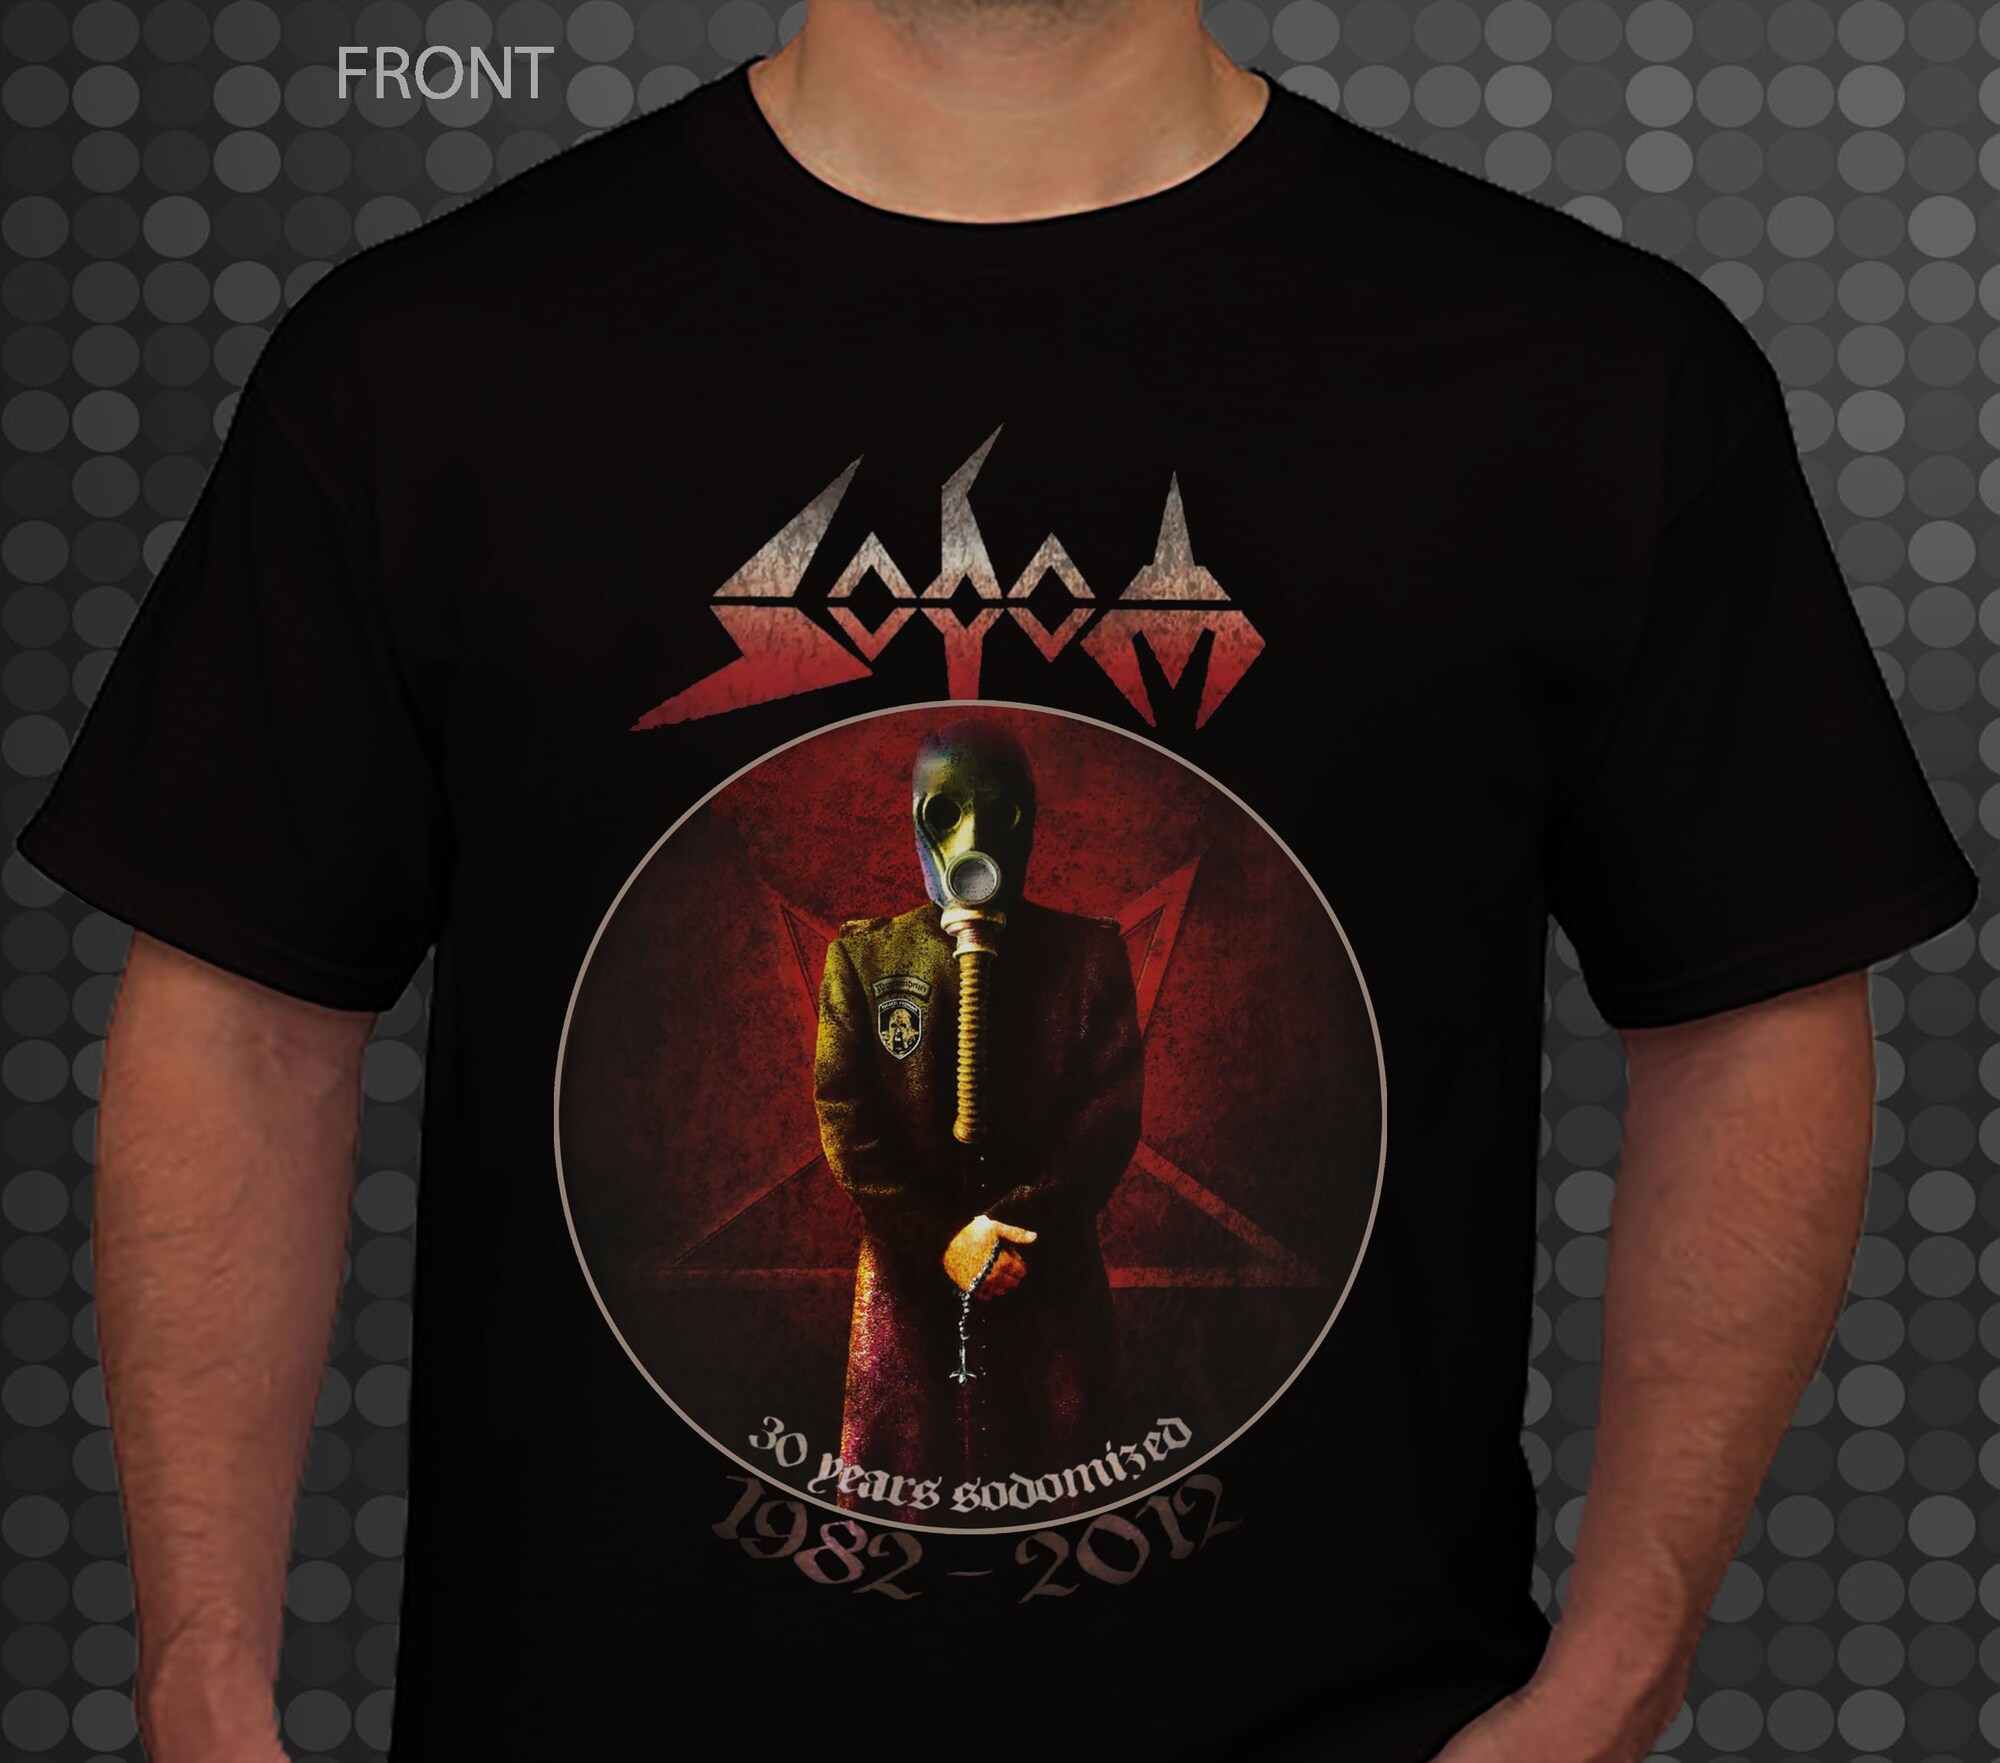 SODOM -30 Years Sodomized -1982-2012 t-shirt